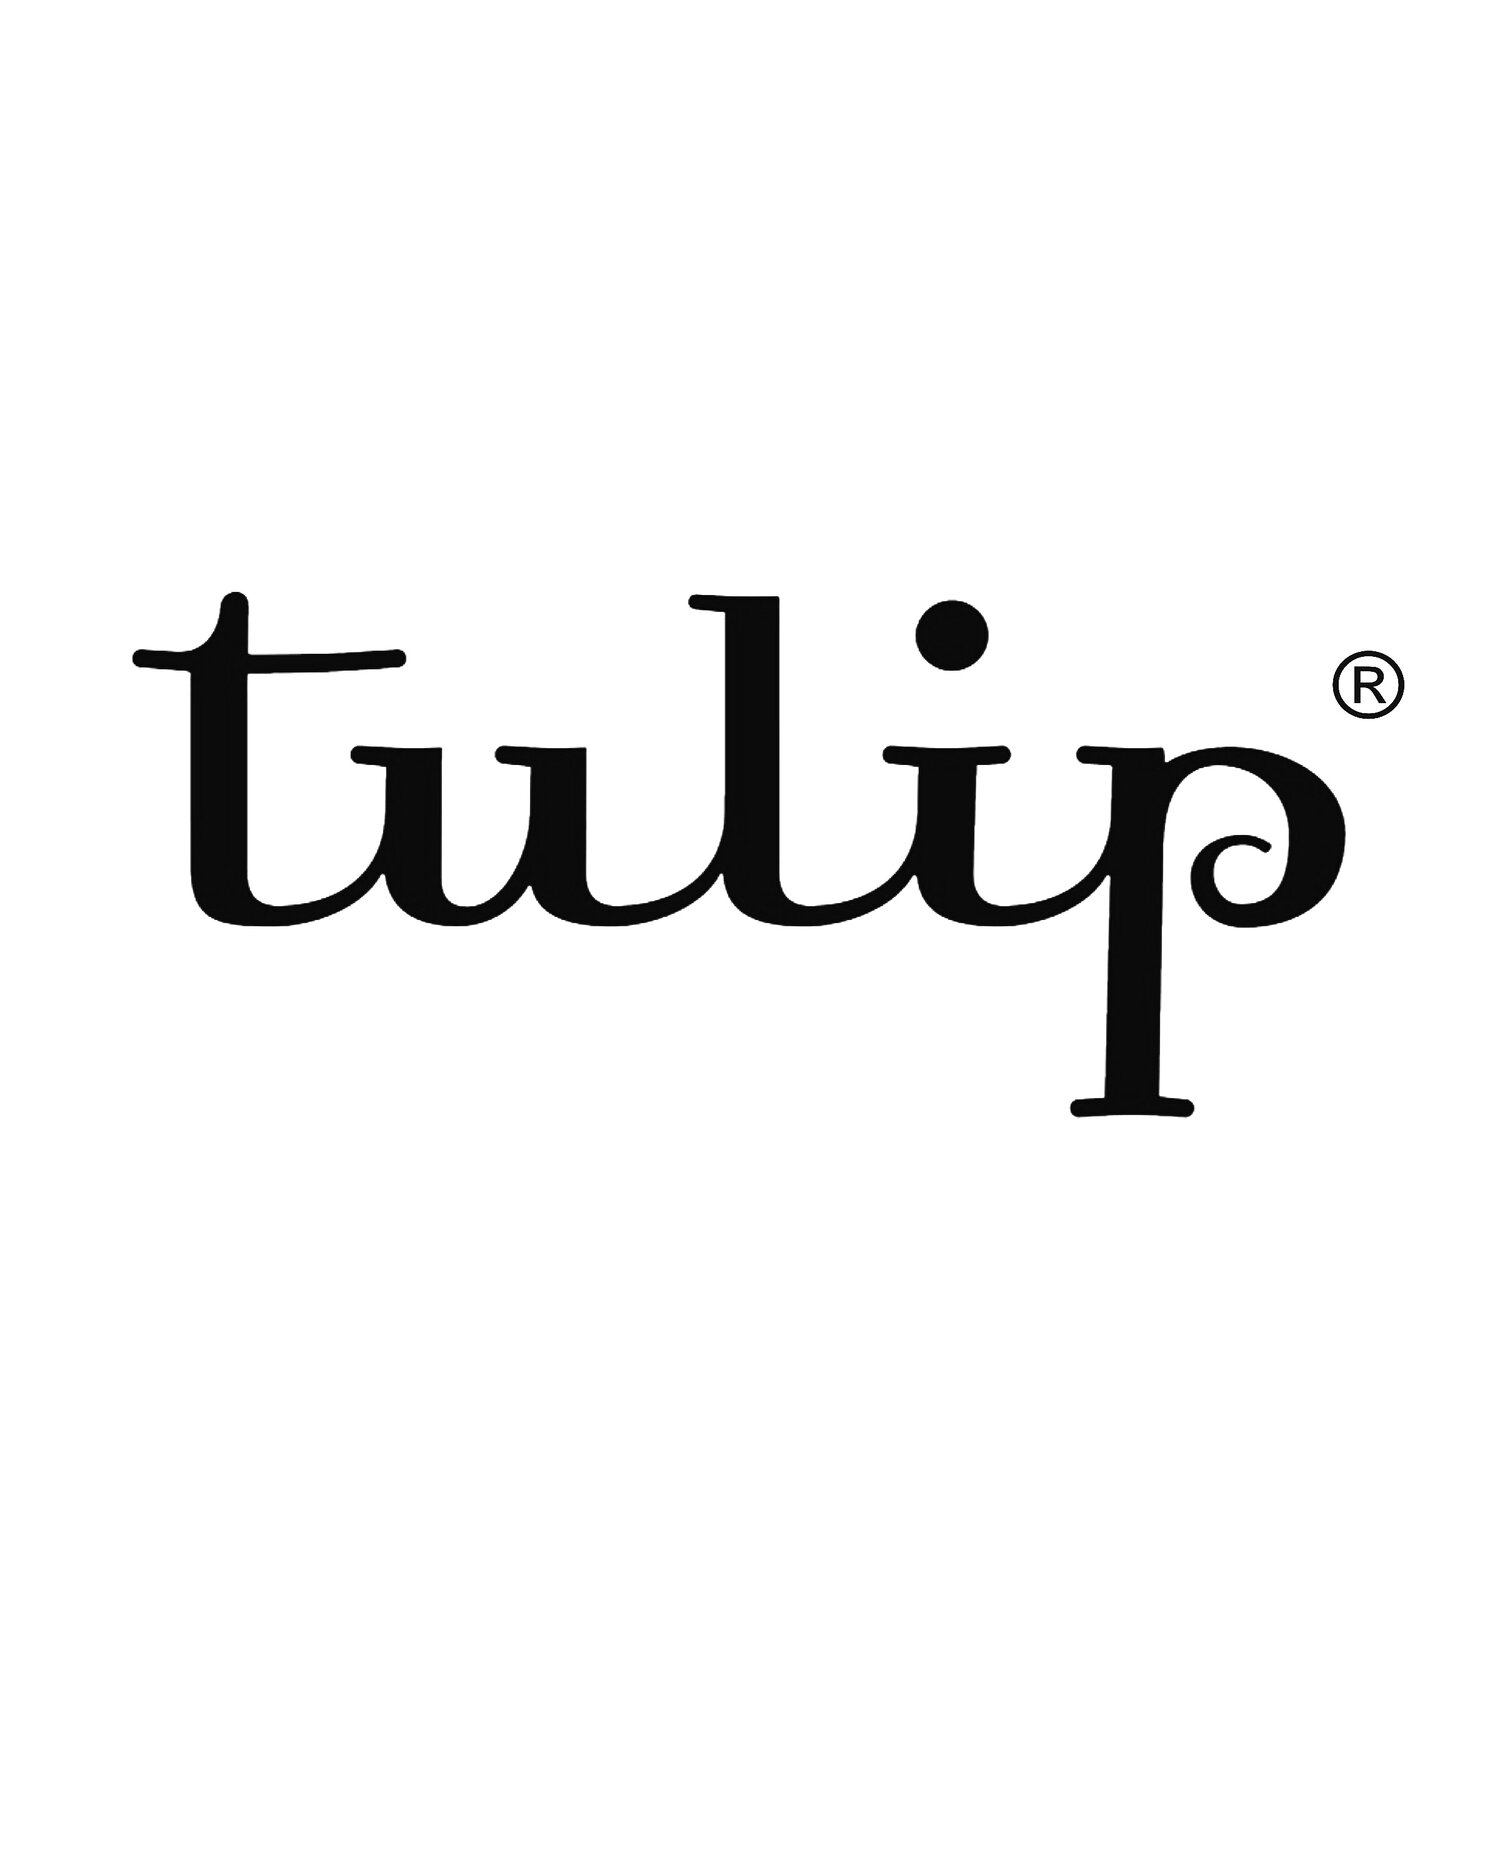 Tulip Perfume